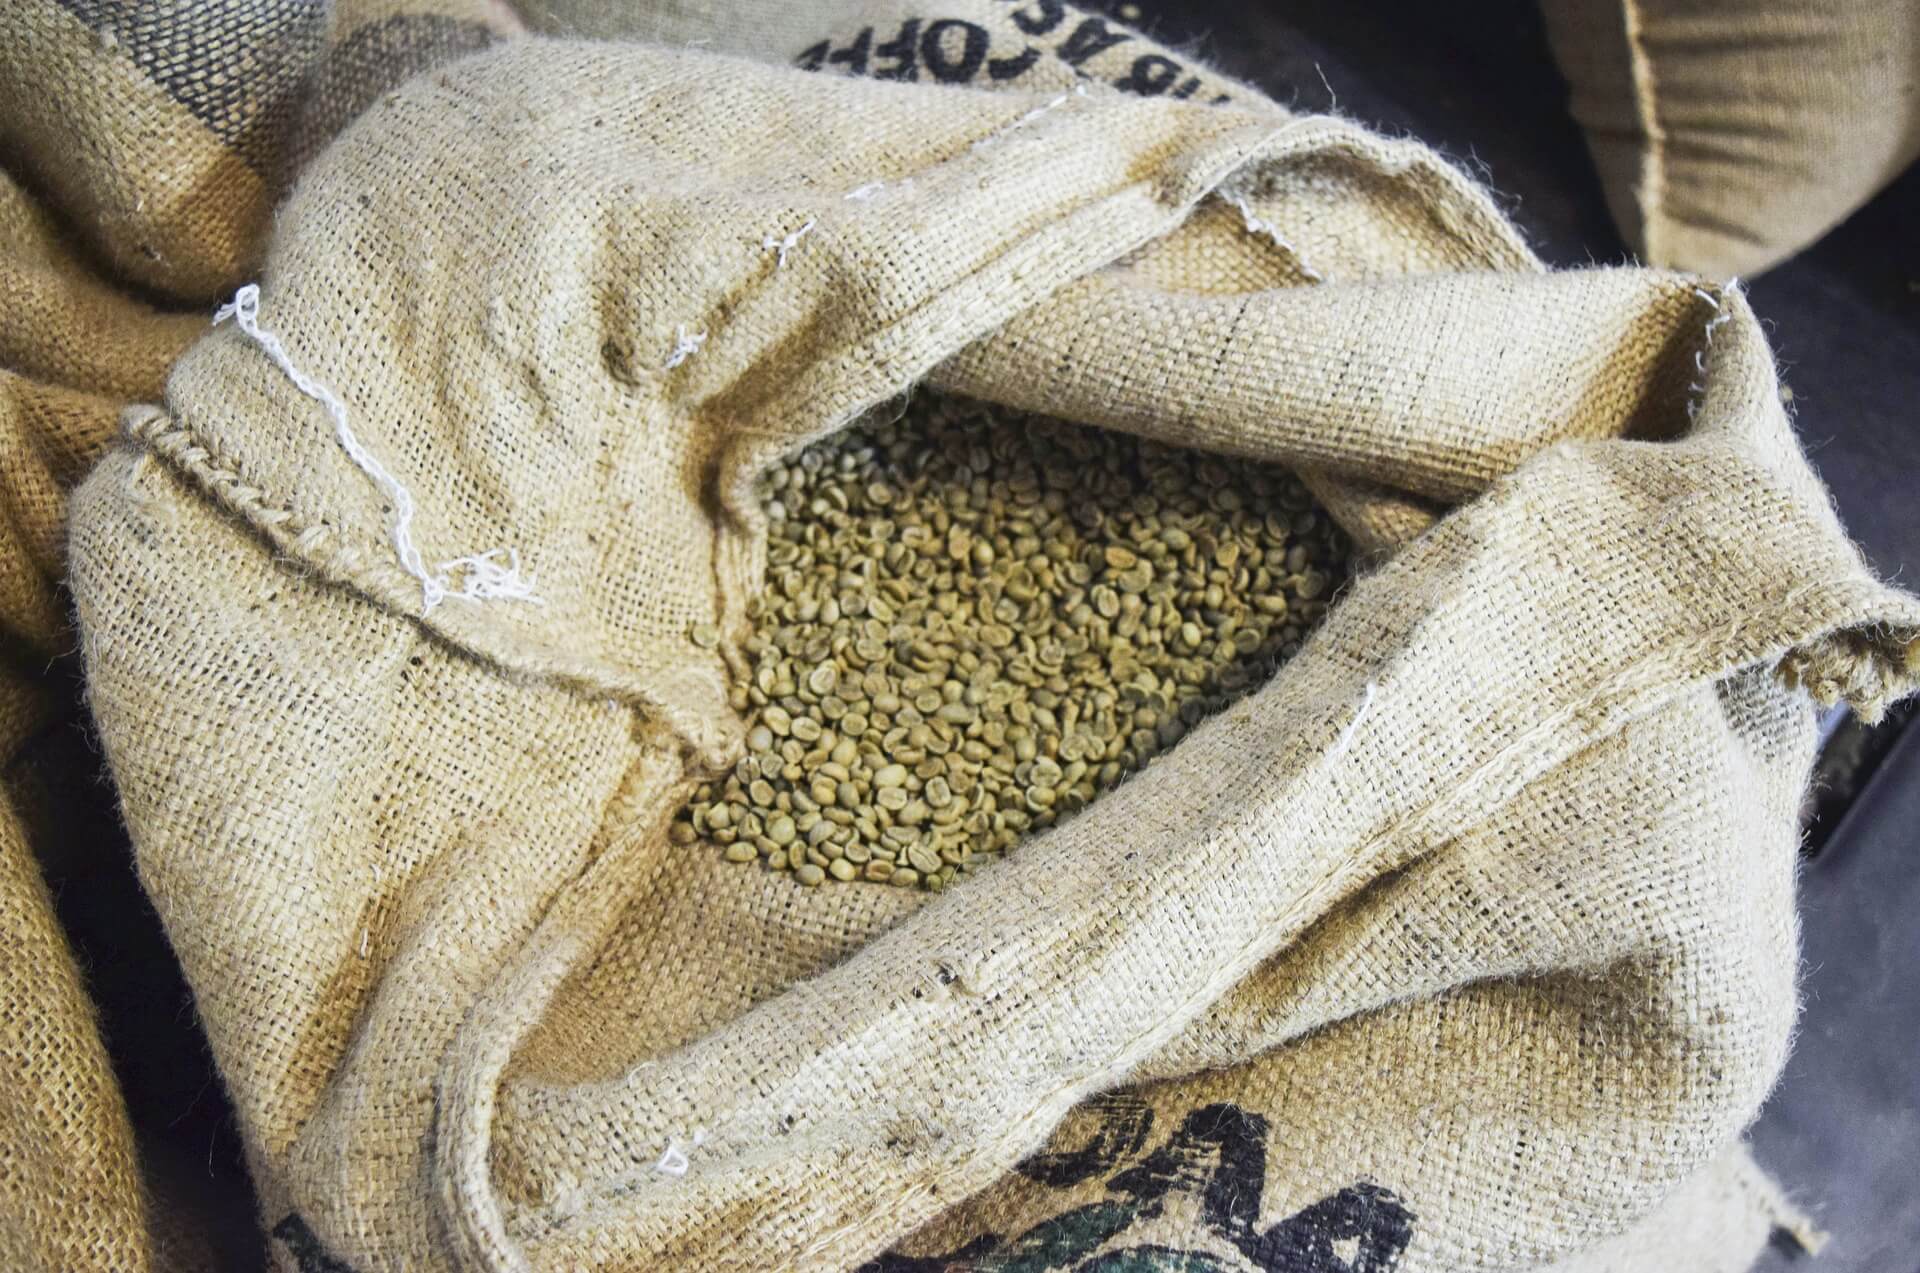 Green specialty coffee beans in jute bag